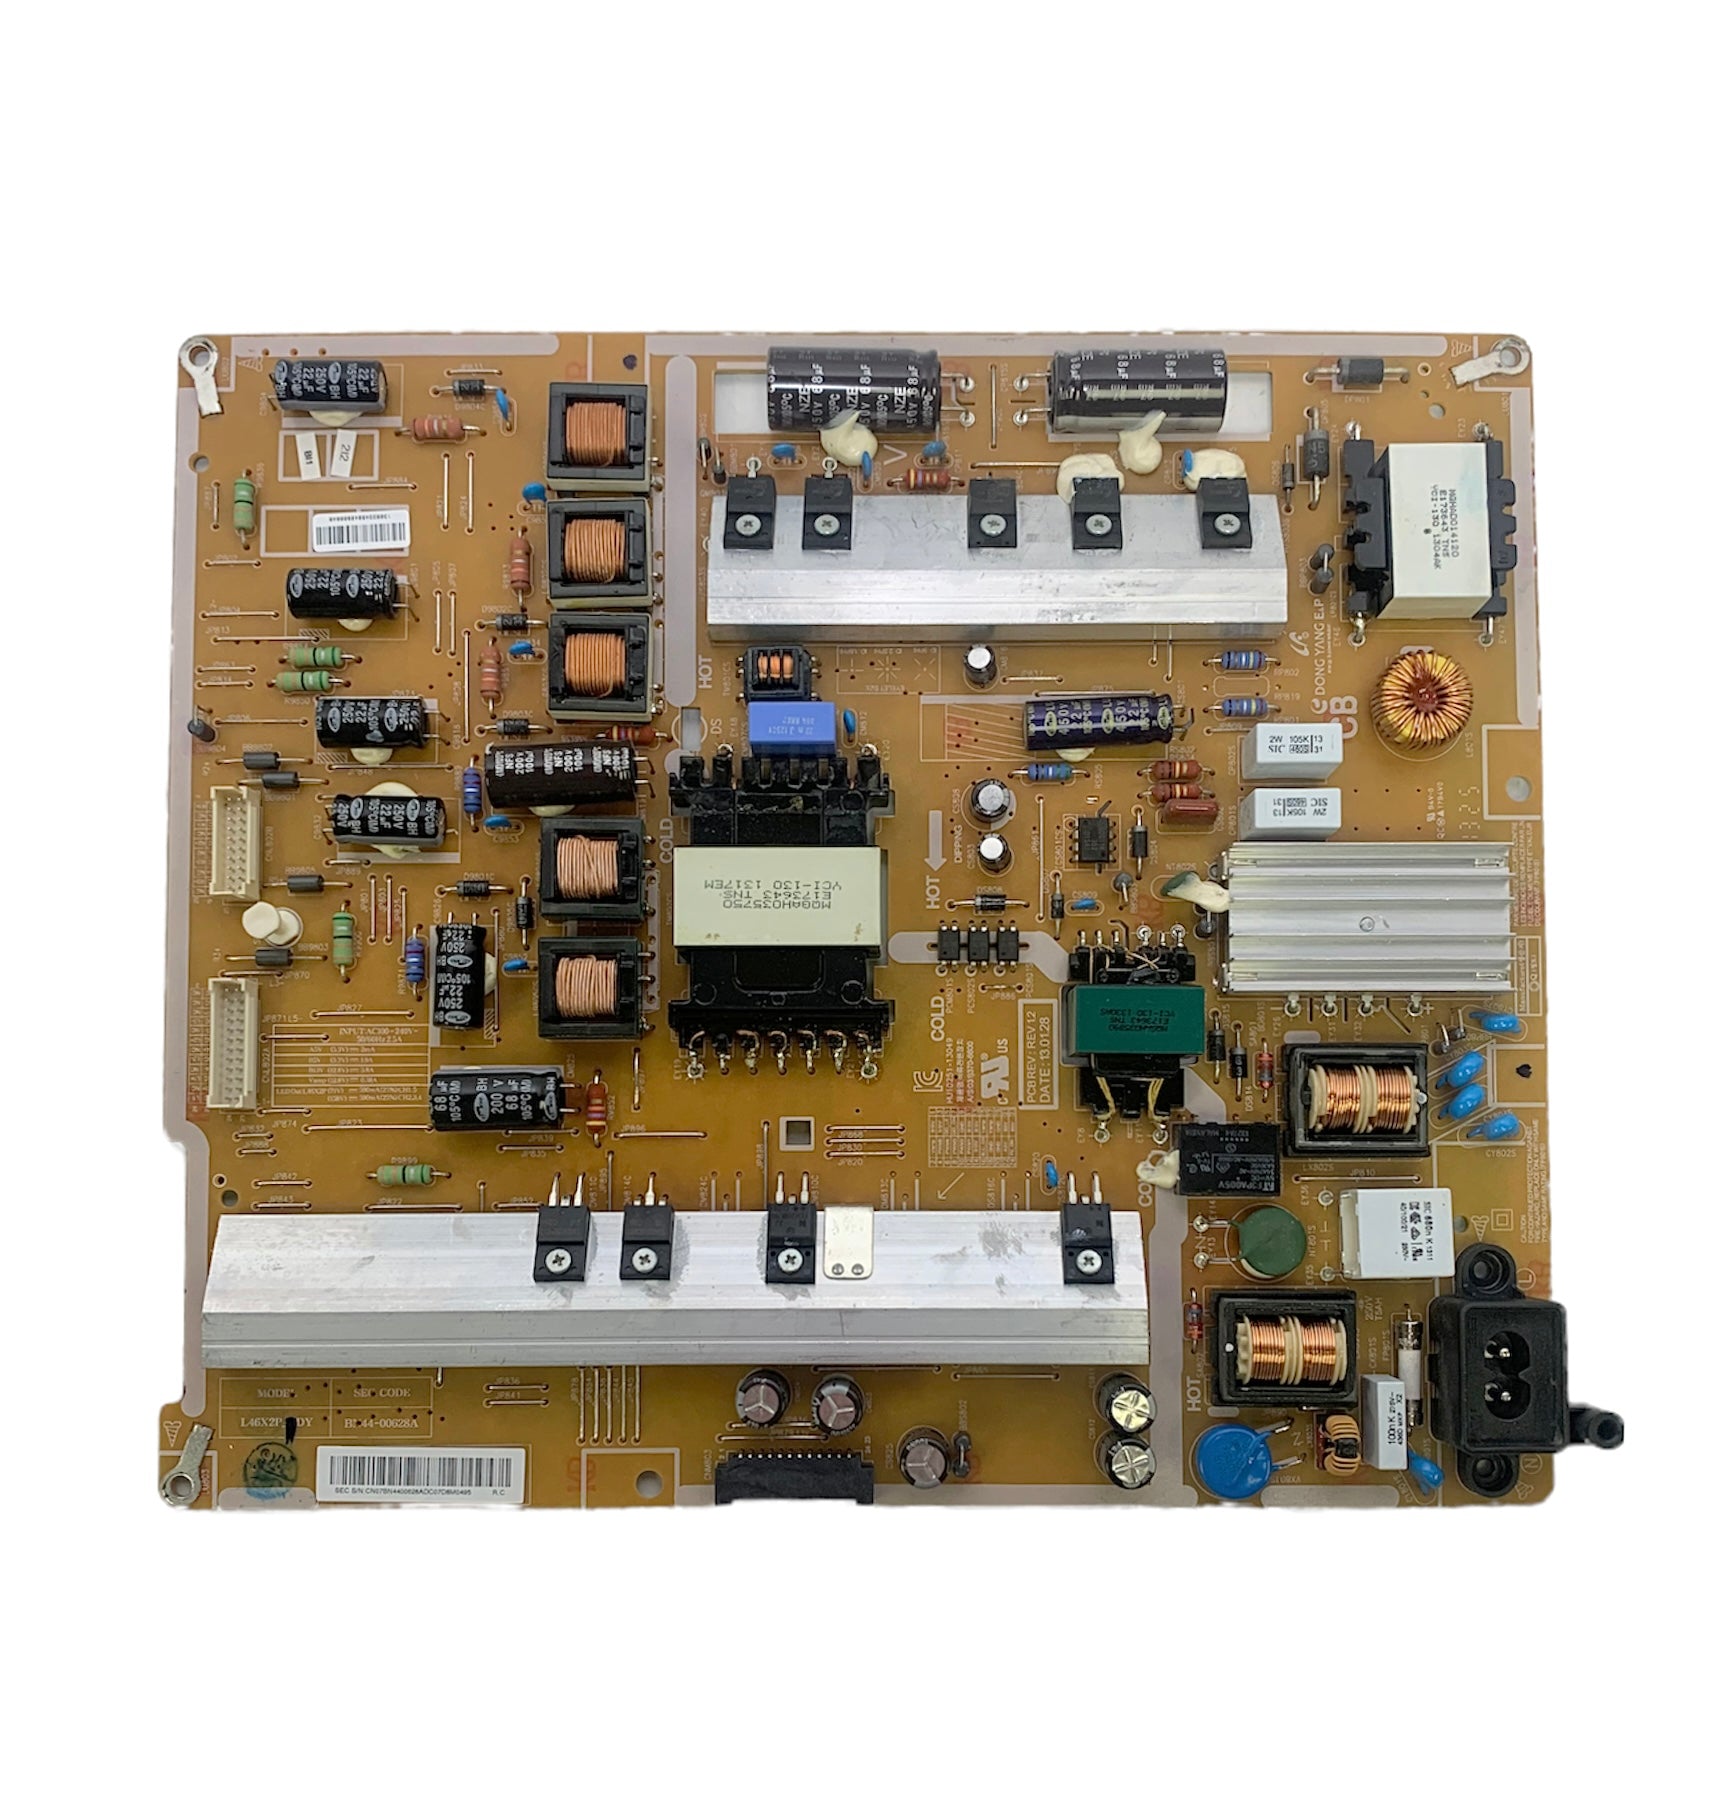 Samsung BN44-00628A (HU10251-13049) Power Supply / LED Board